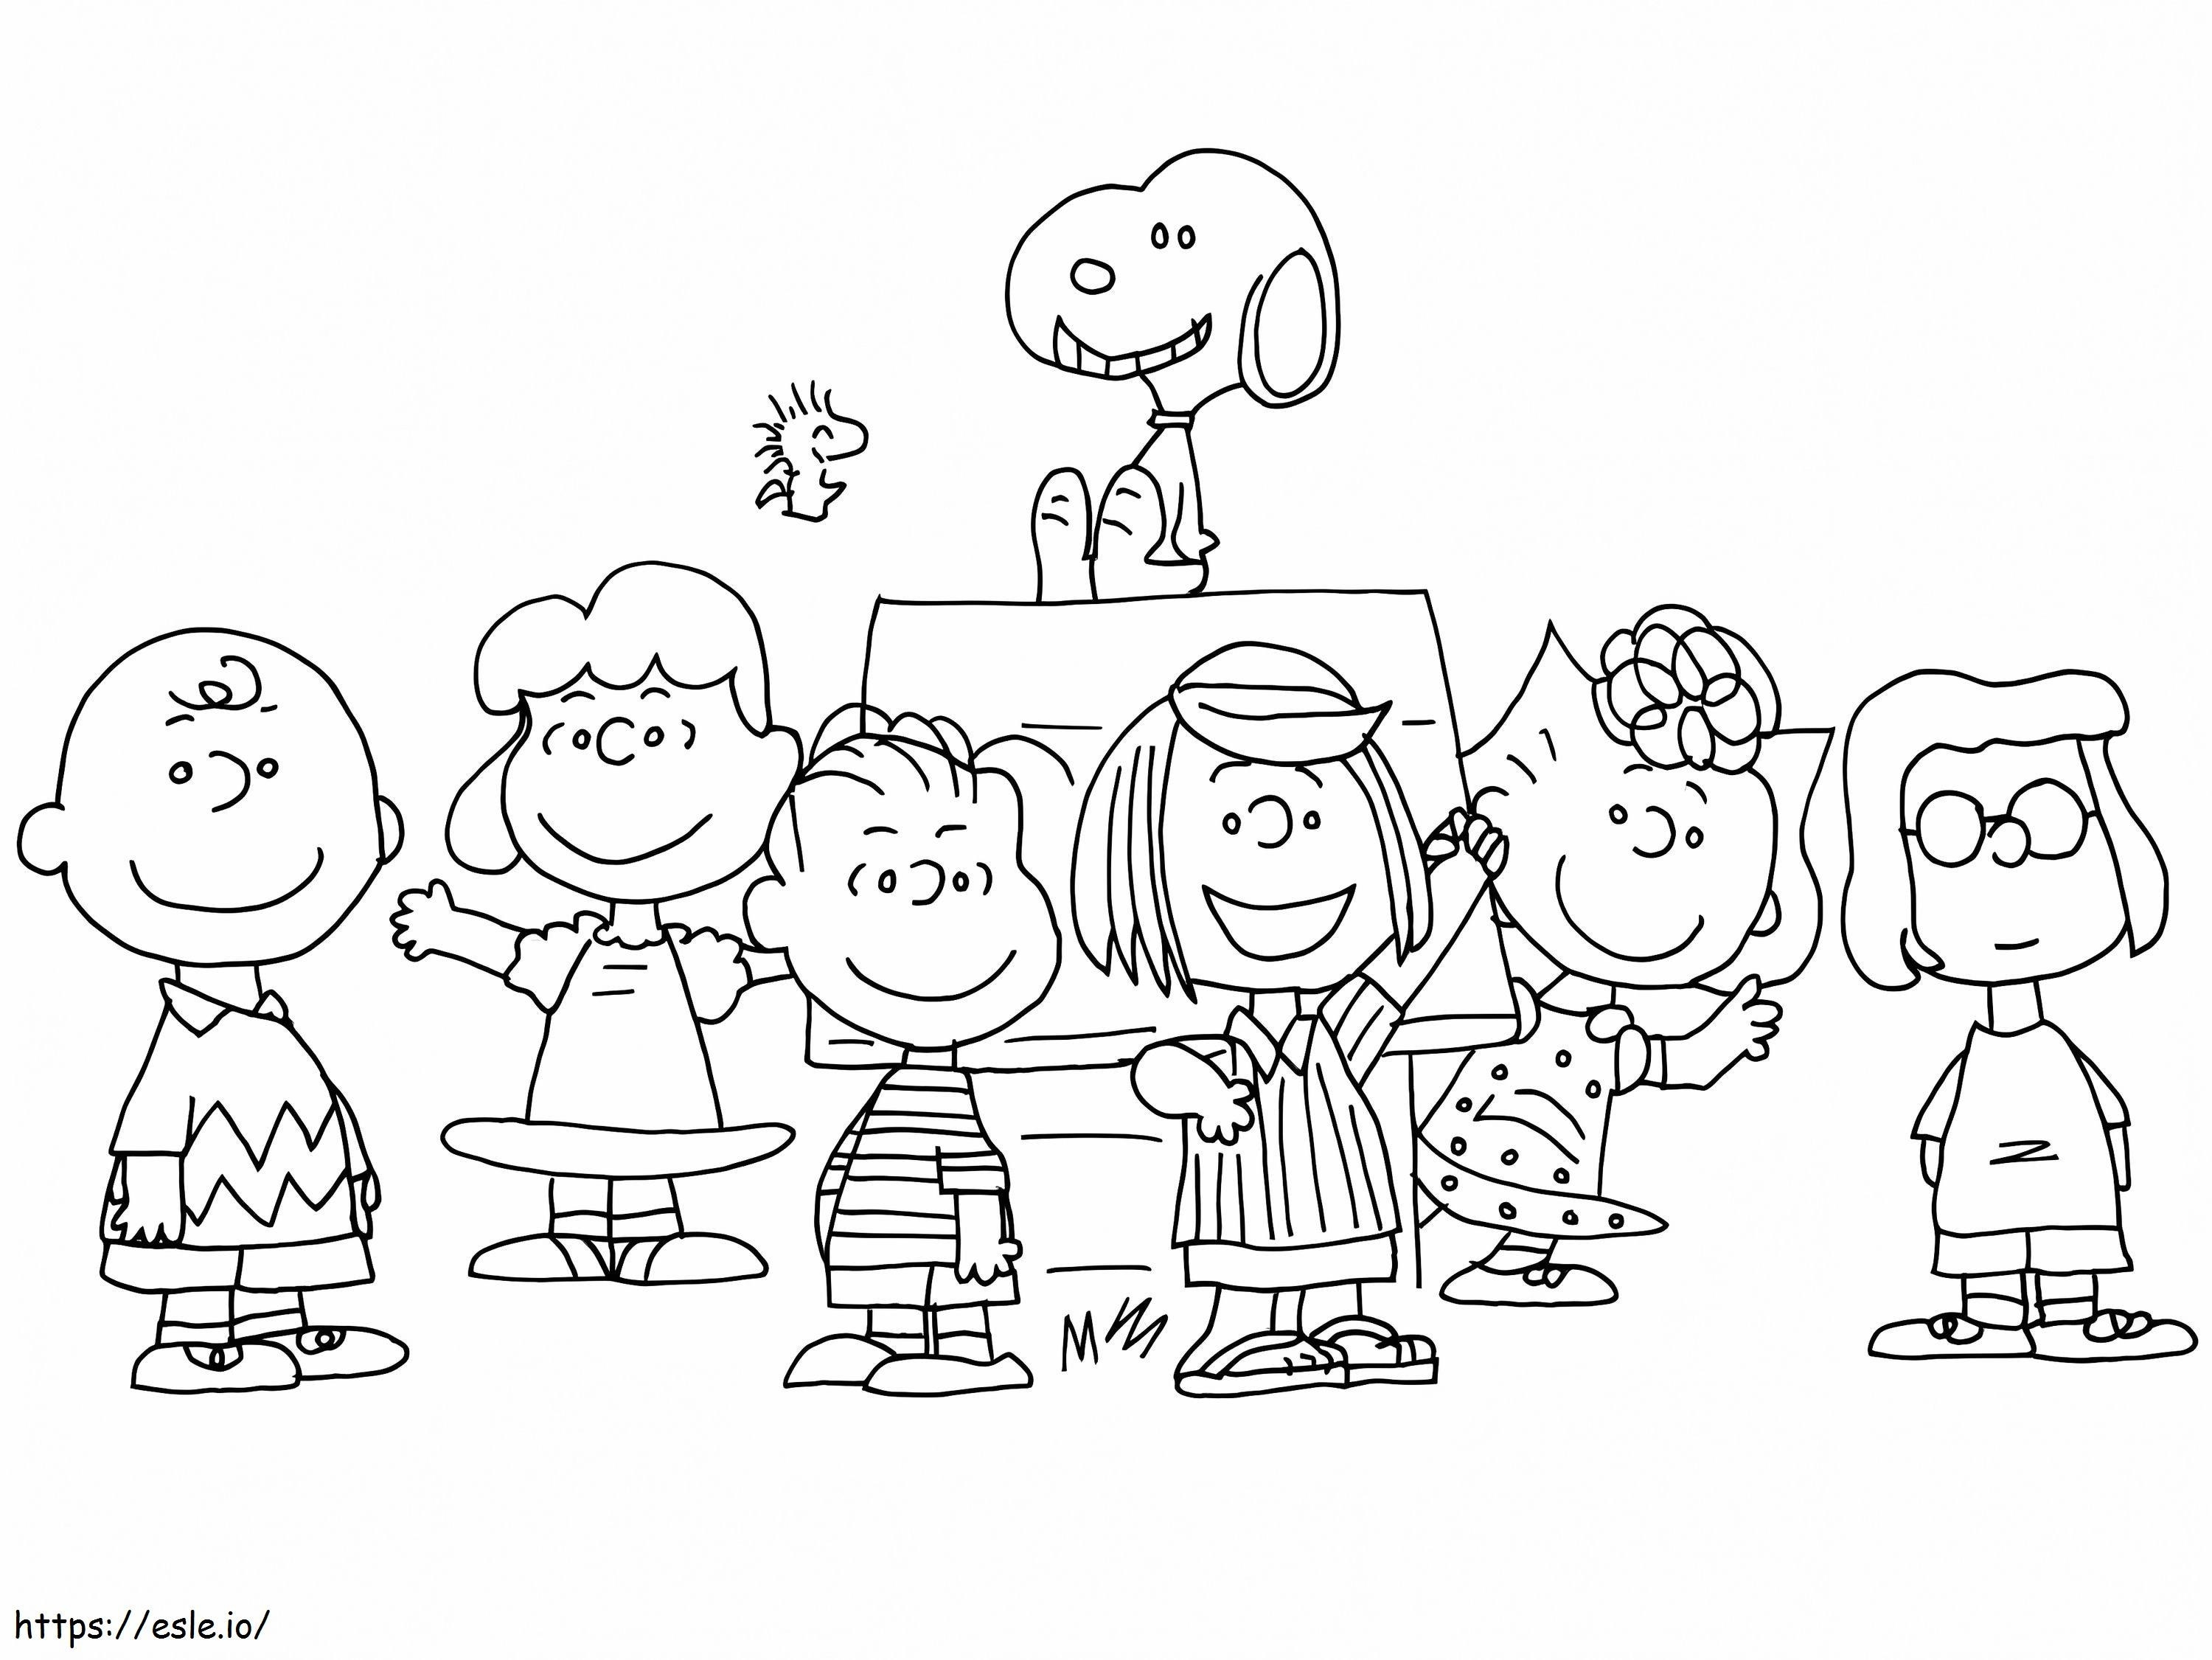 Peanuts-Charaktere 1 ausmalbilder